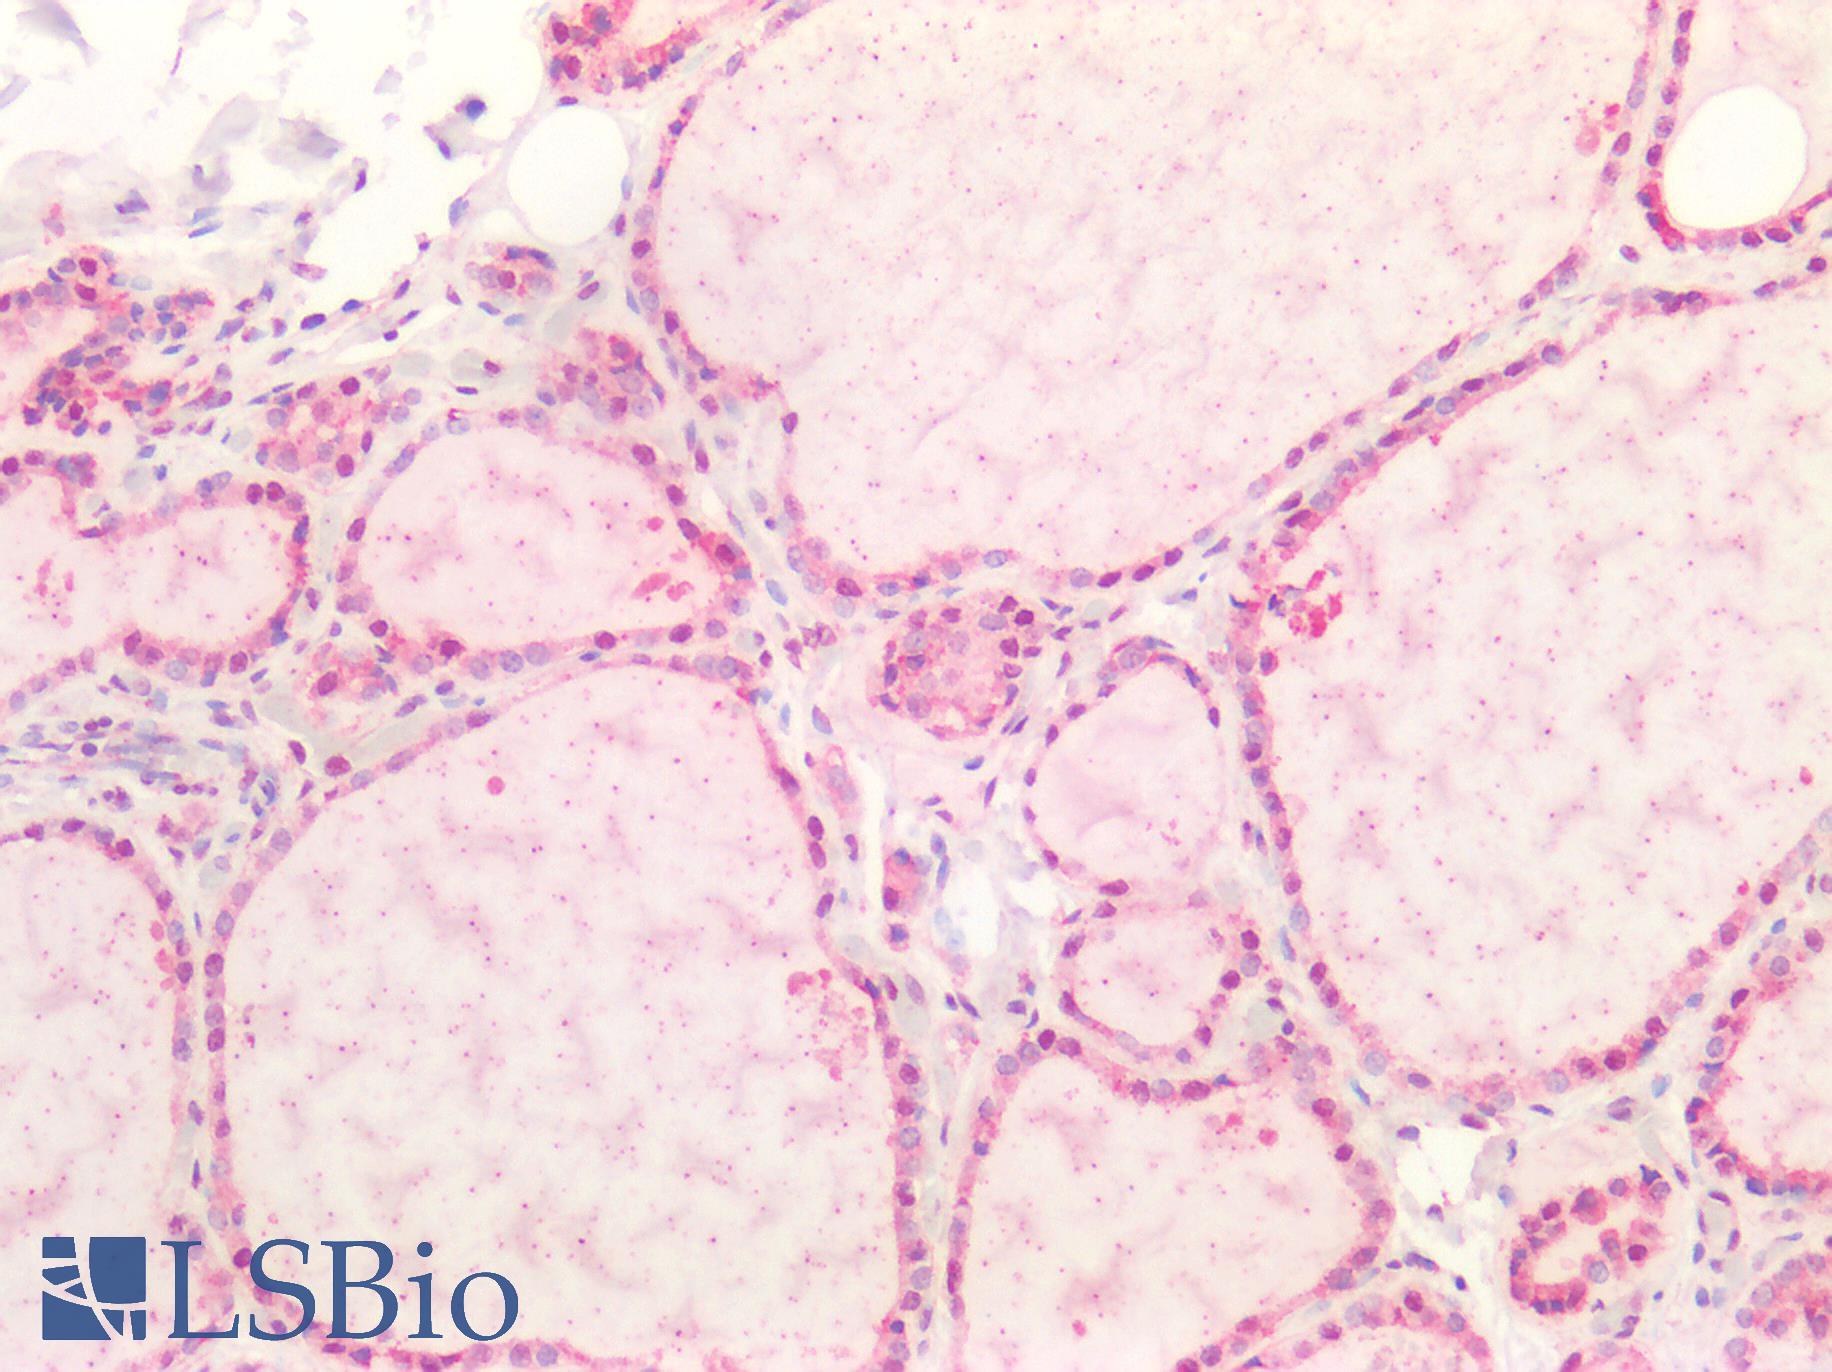 CASP9 / Caspase 9 Antibody - Human Thyroid: Formalin-Fixed, Paraffin-Embedded (FFPE)